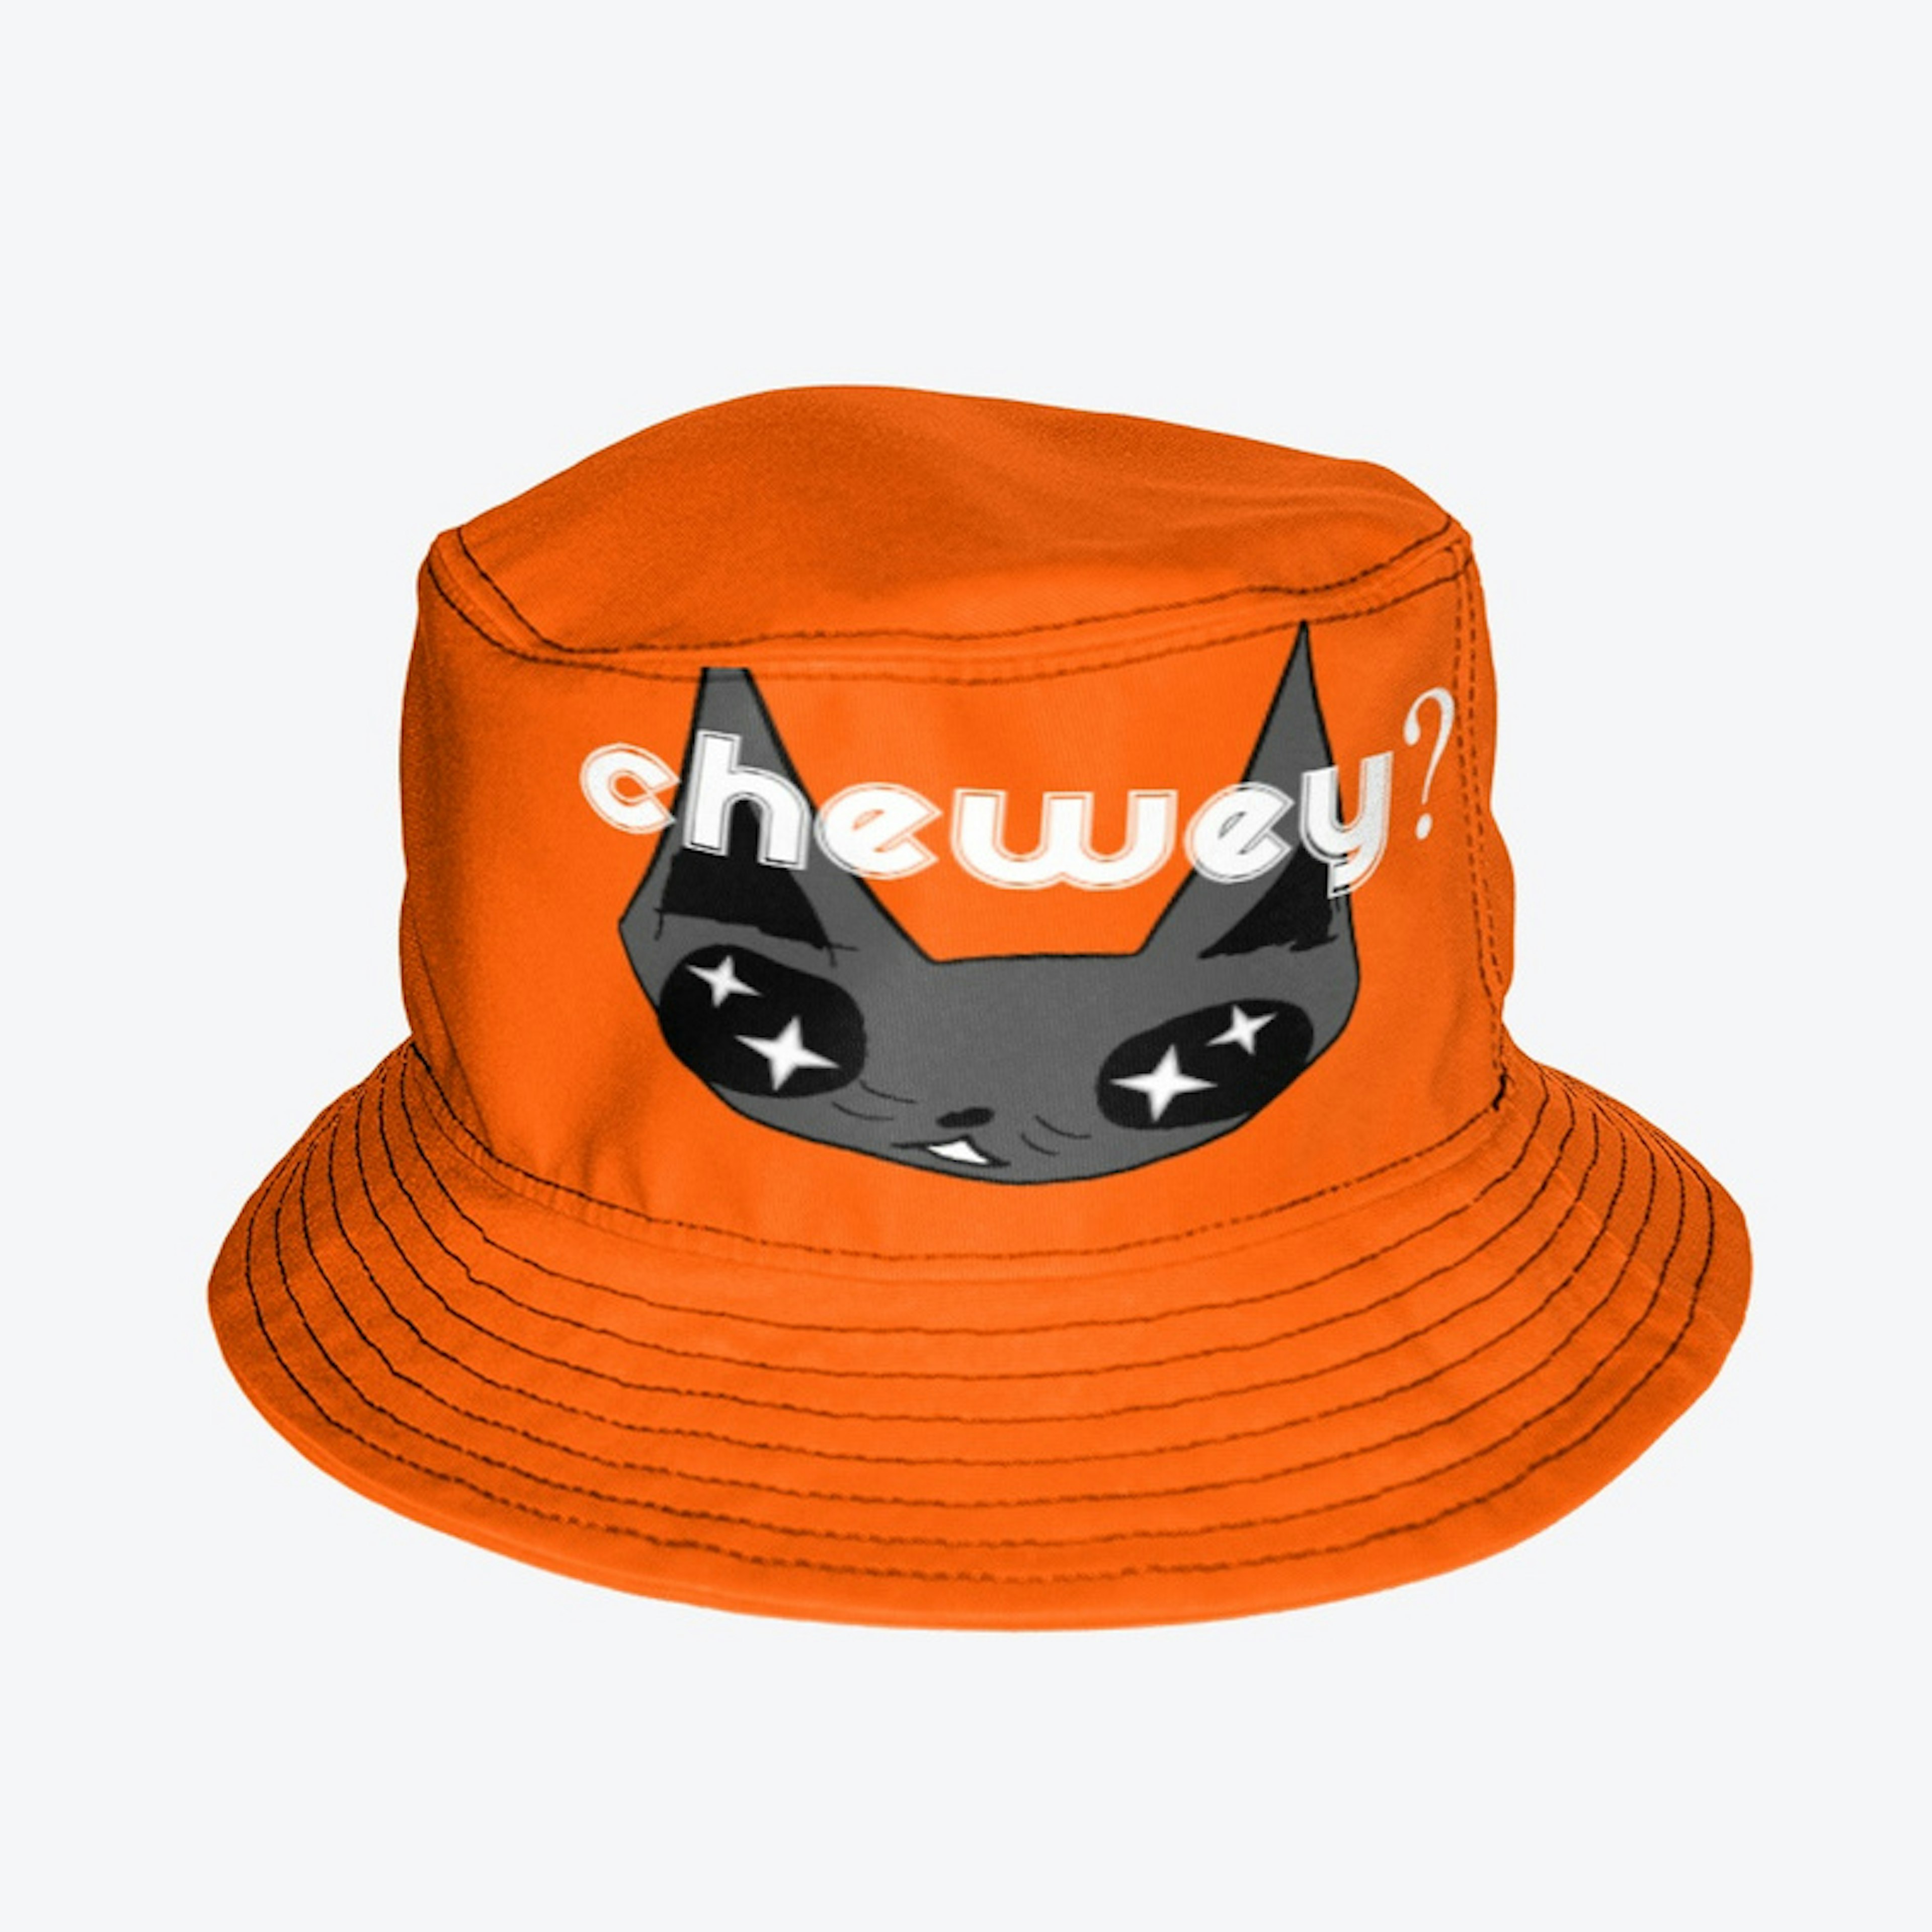 Chewey Bucket hat